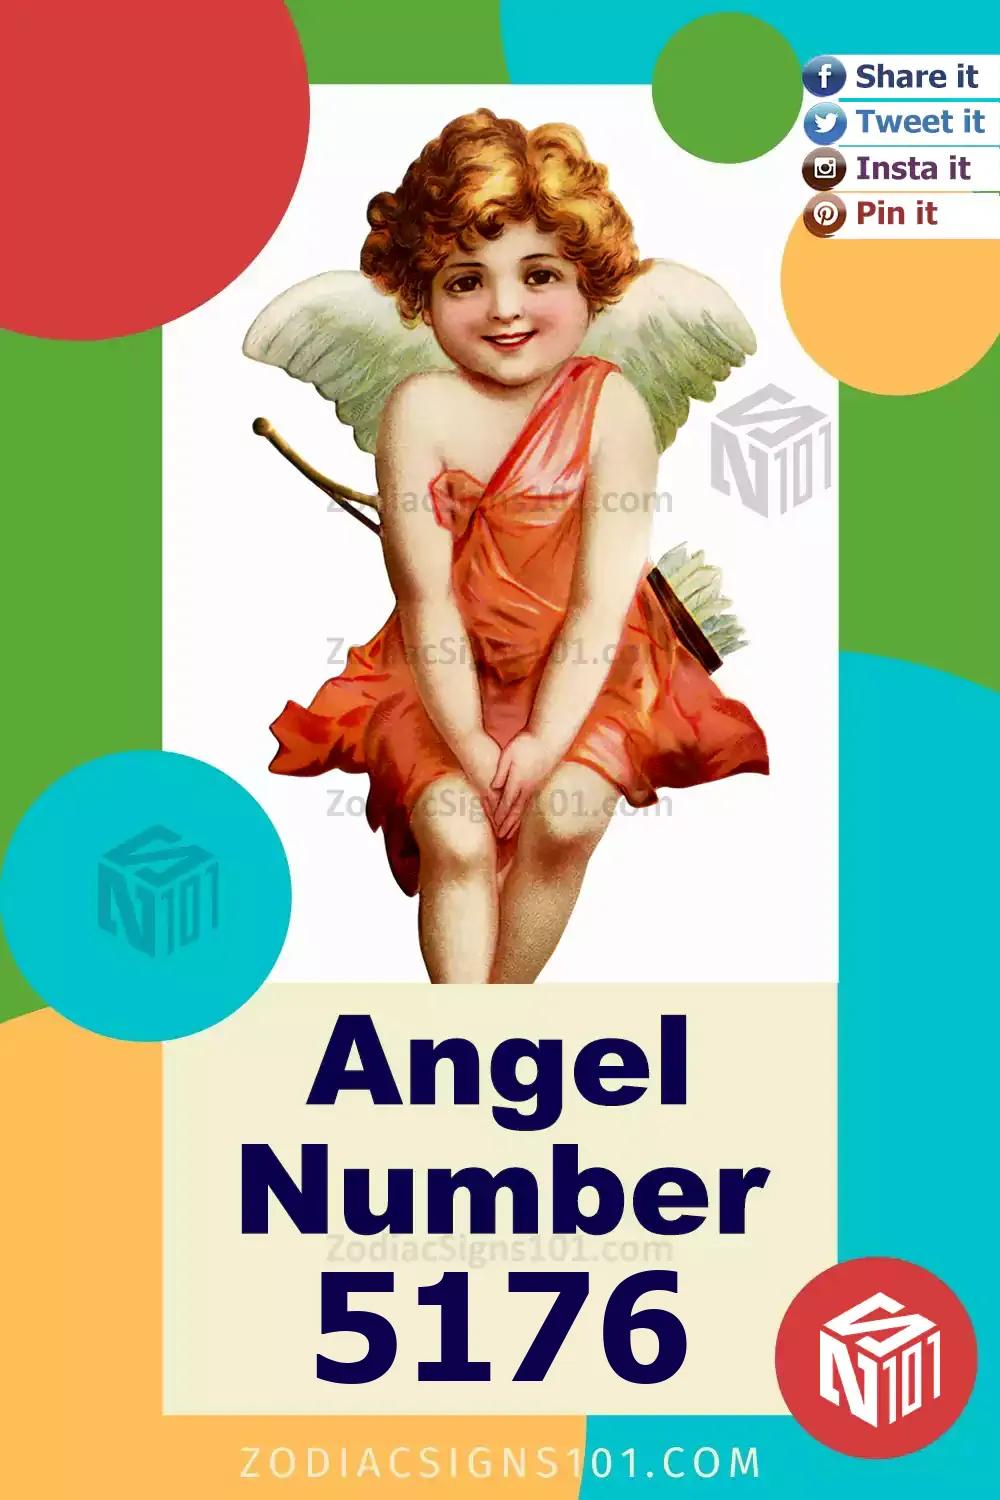 5176-Angel-Number-Meaning.jpg